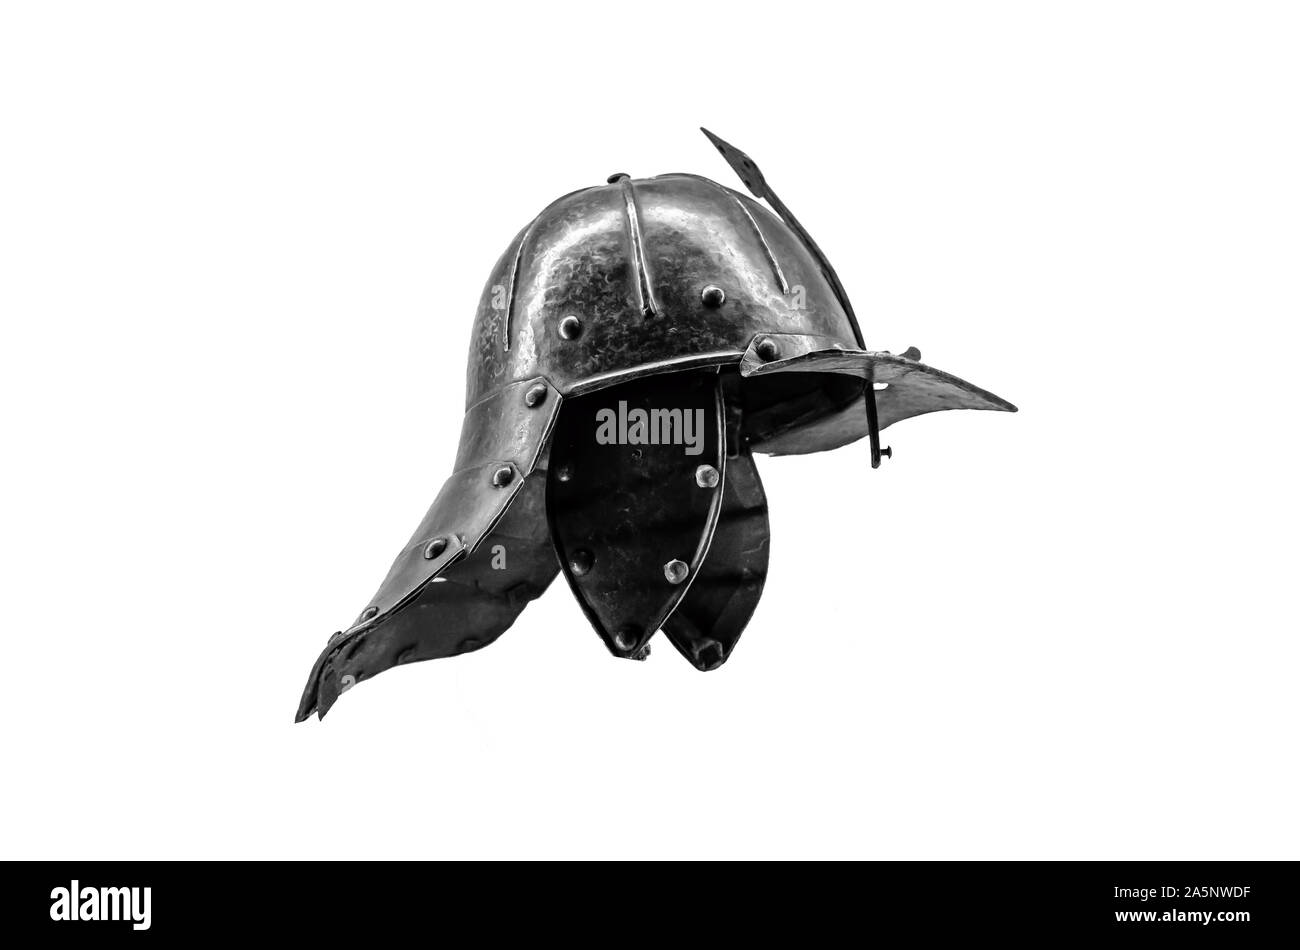 An old iron knight's helmet on white background. Stock Photo